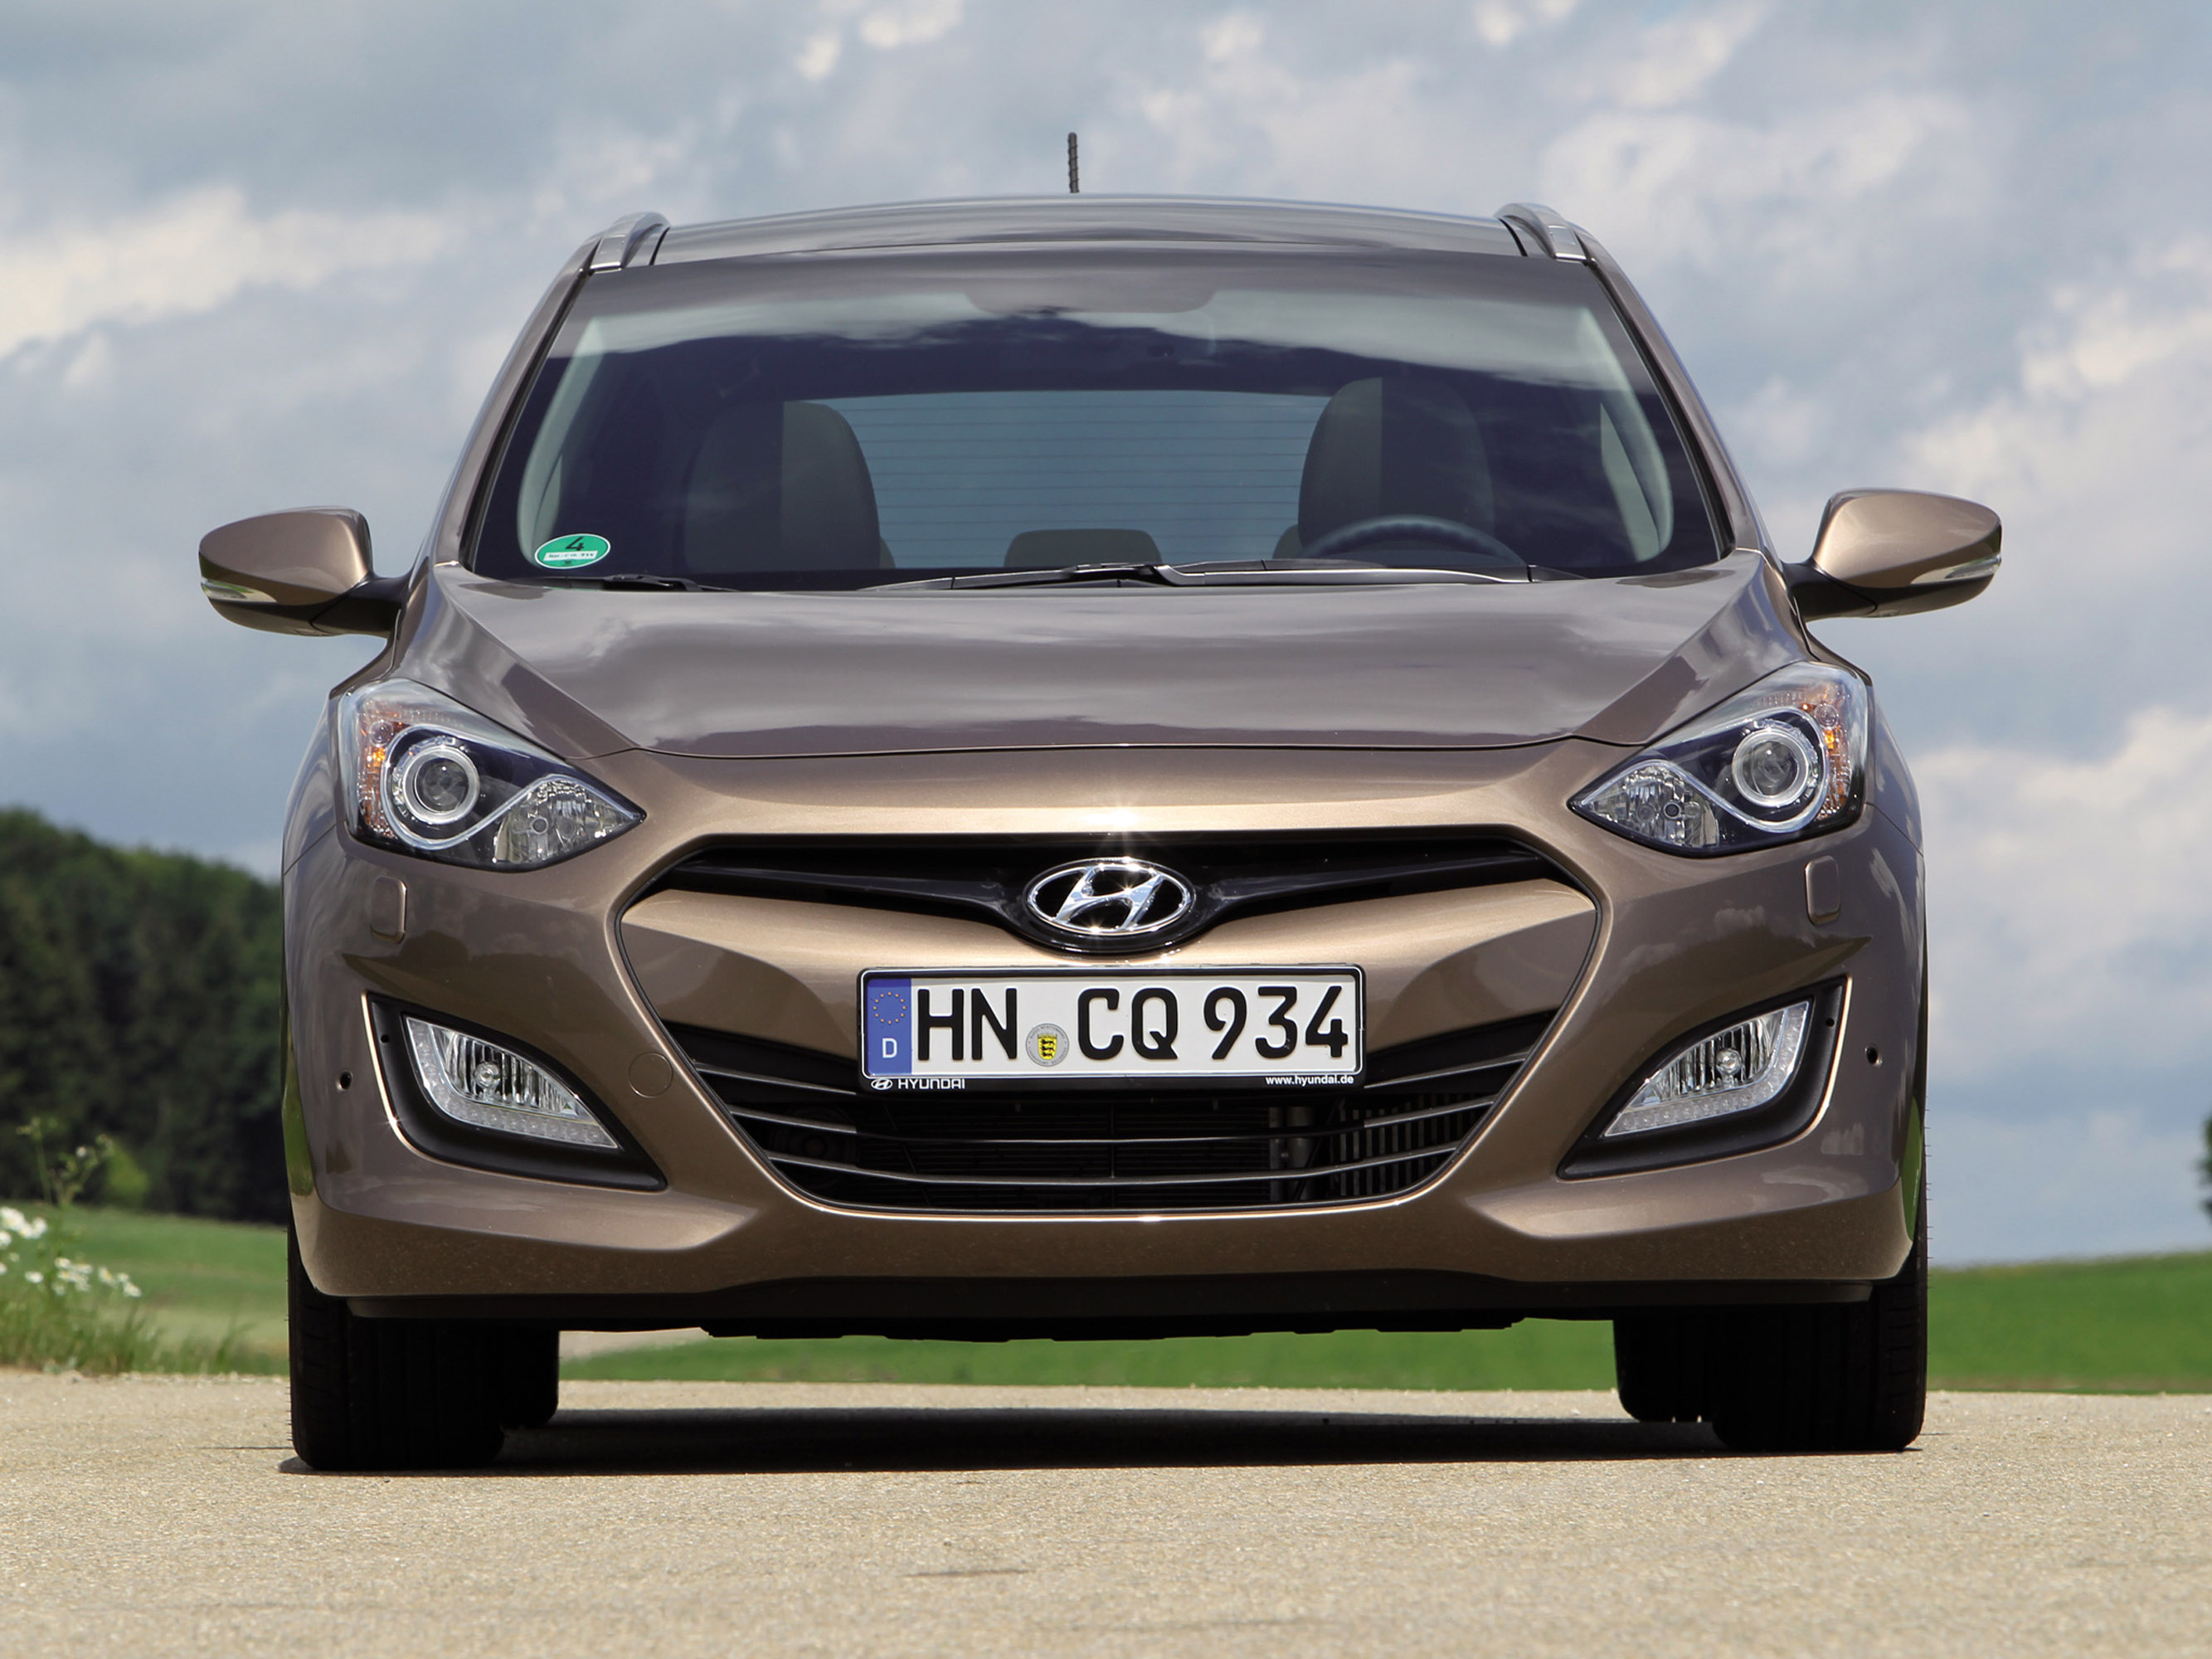 Hyundai i30 универсал. Hyundai i30 2013. Hyundai i30 Wagon. Hyundai i30 GD. Хендай i30 универсал.